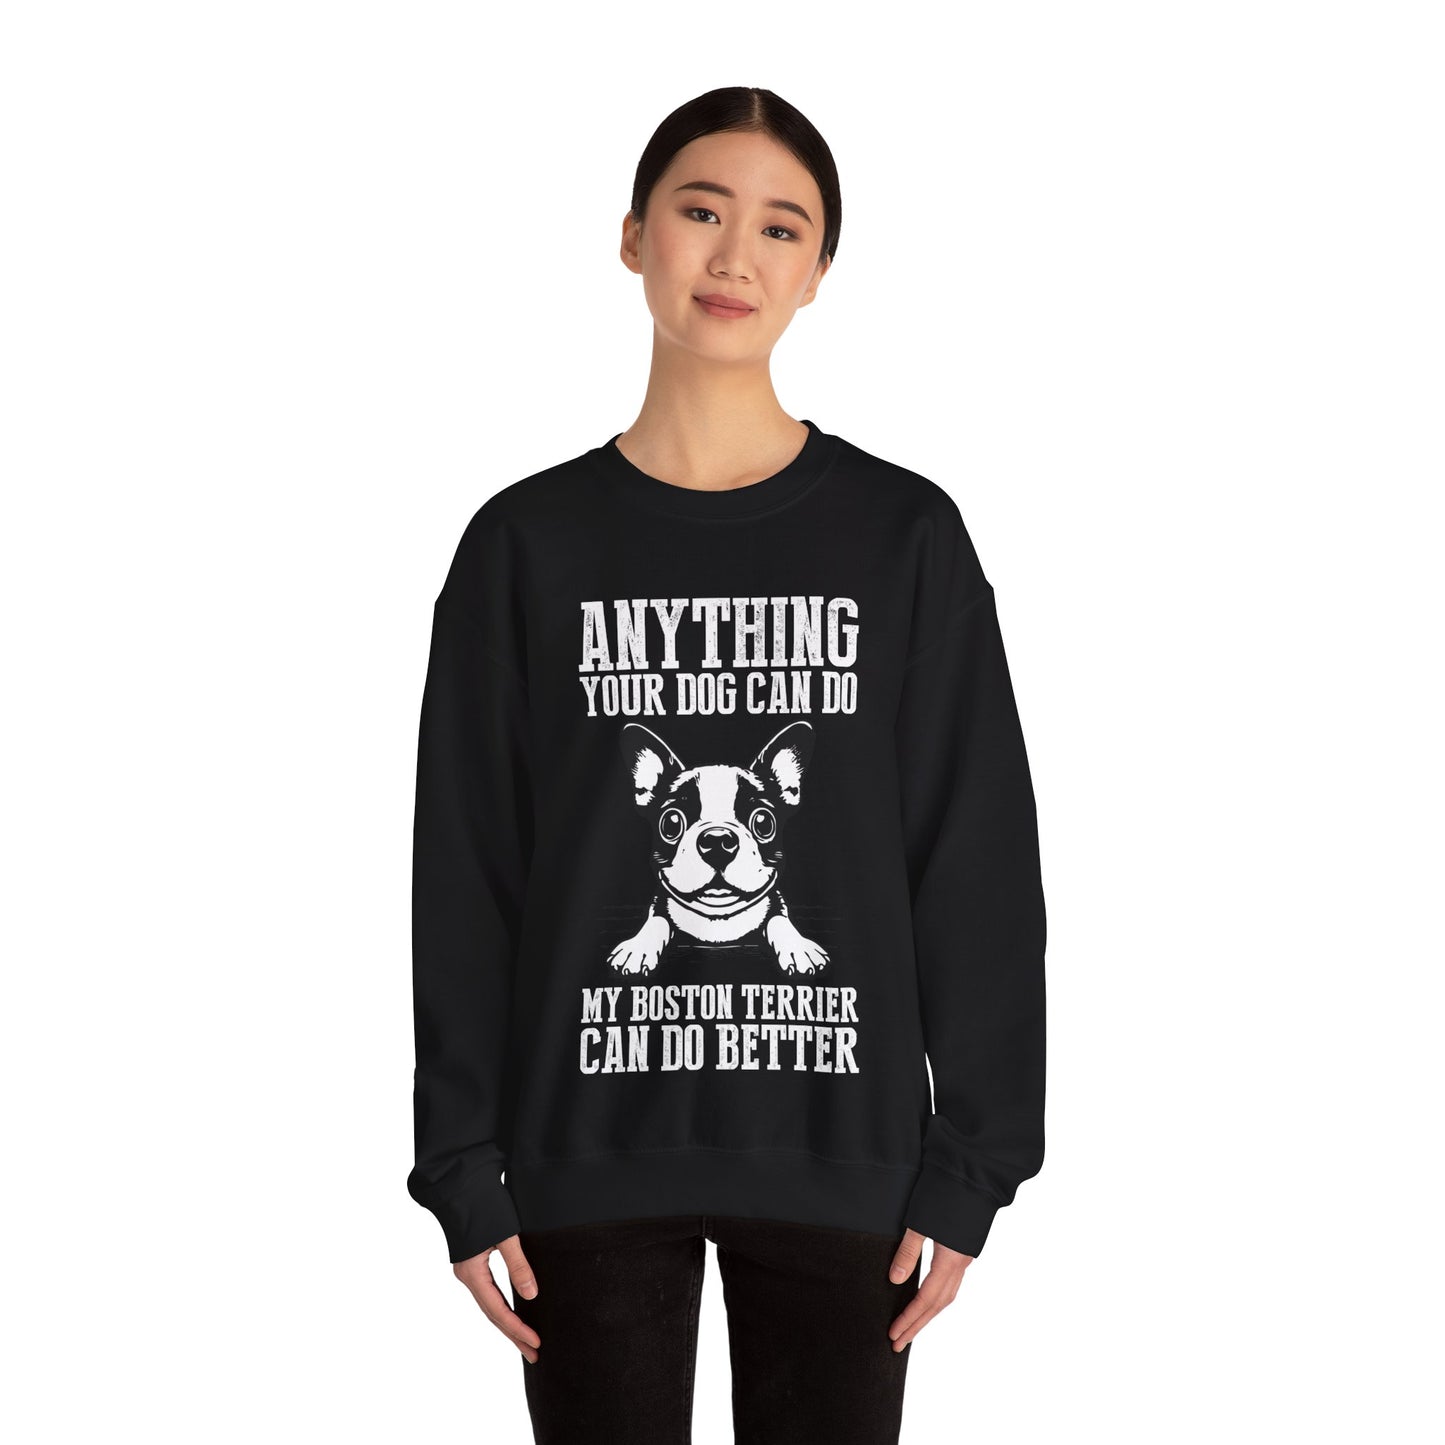 Lucy - Unisex Sweatshirt for Boston Terrier lovers